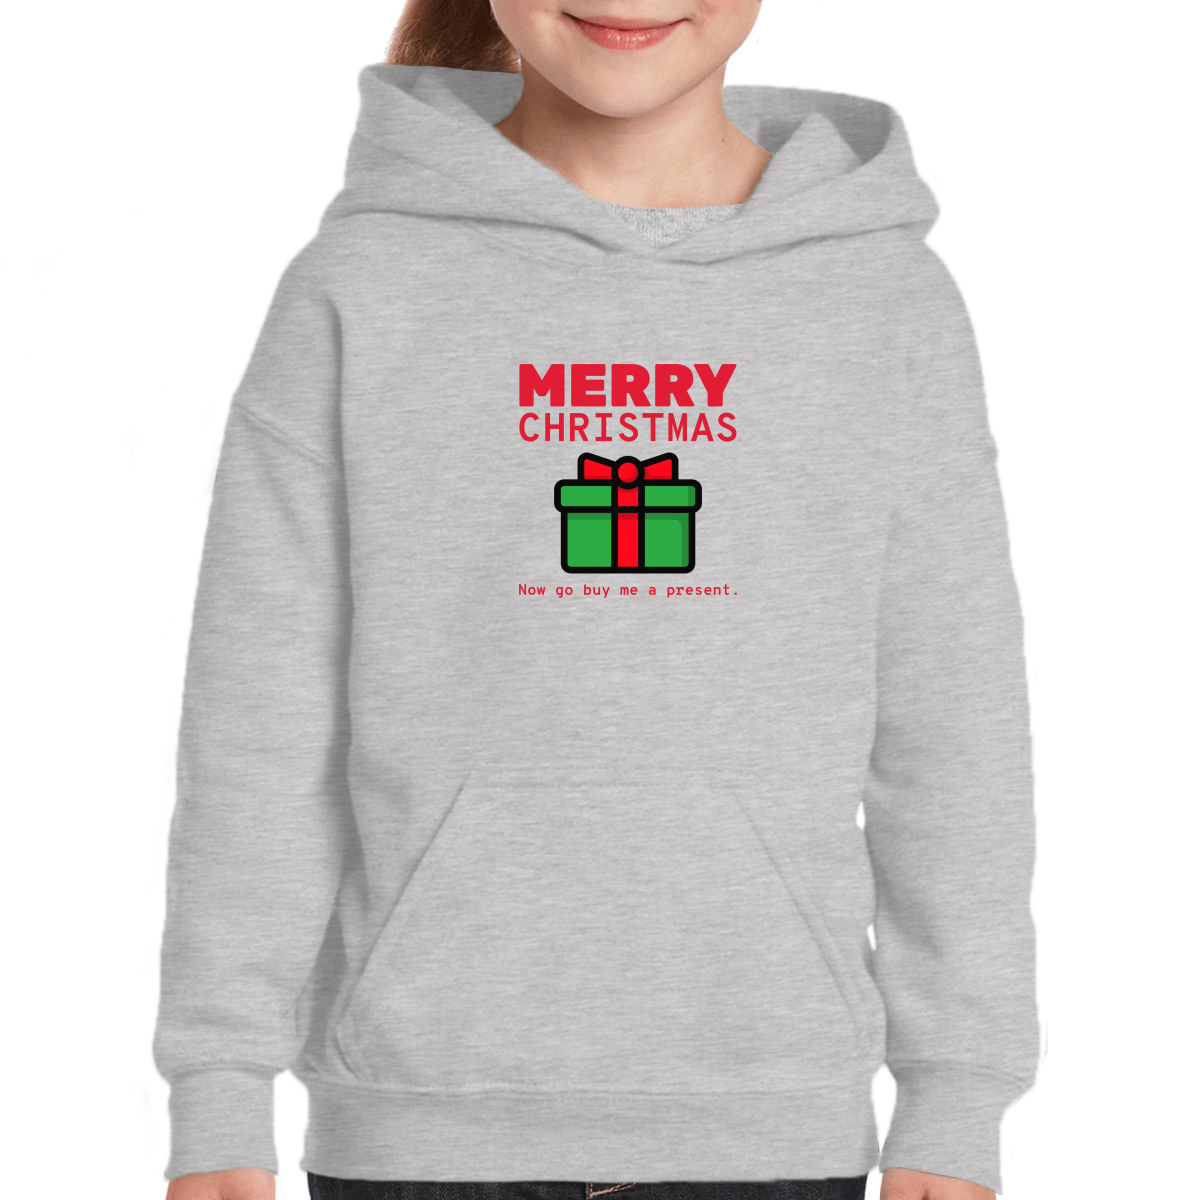 Merry Christmas Now Go Buy Me a Present Kids Hoodie | Gray